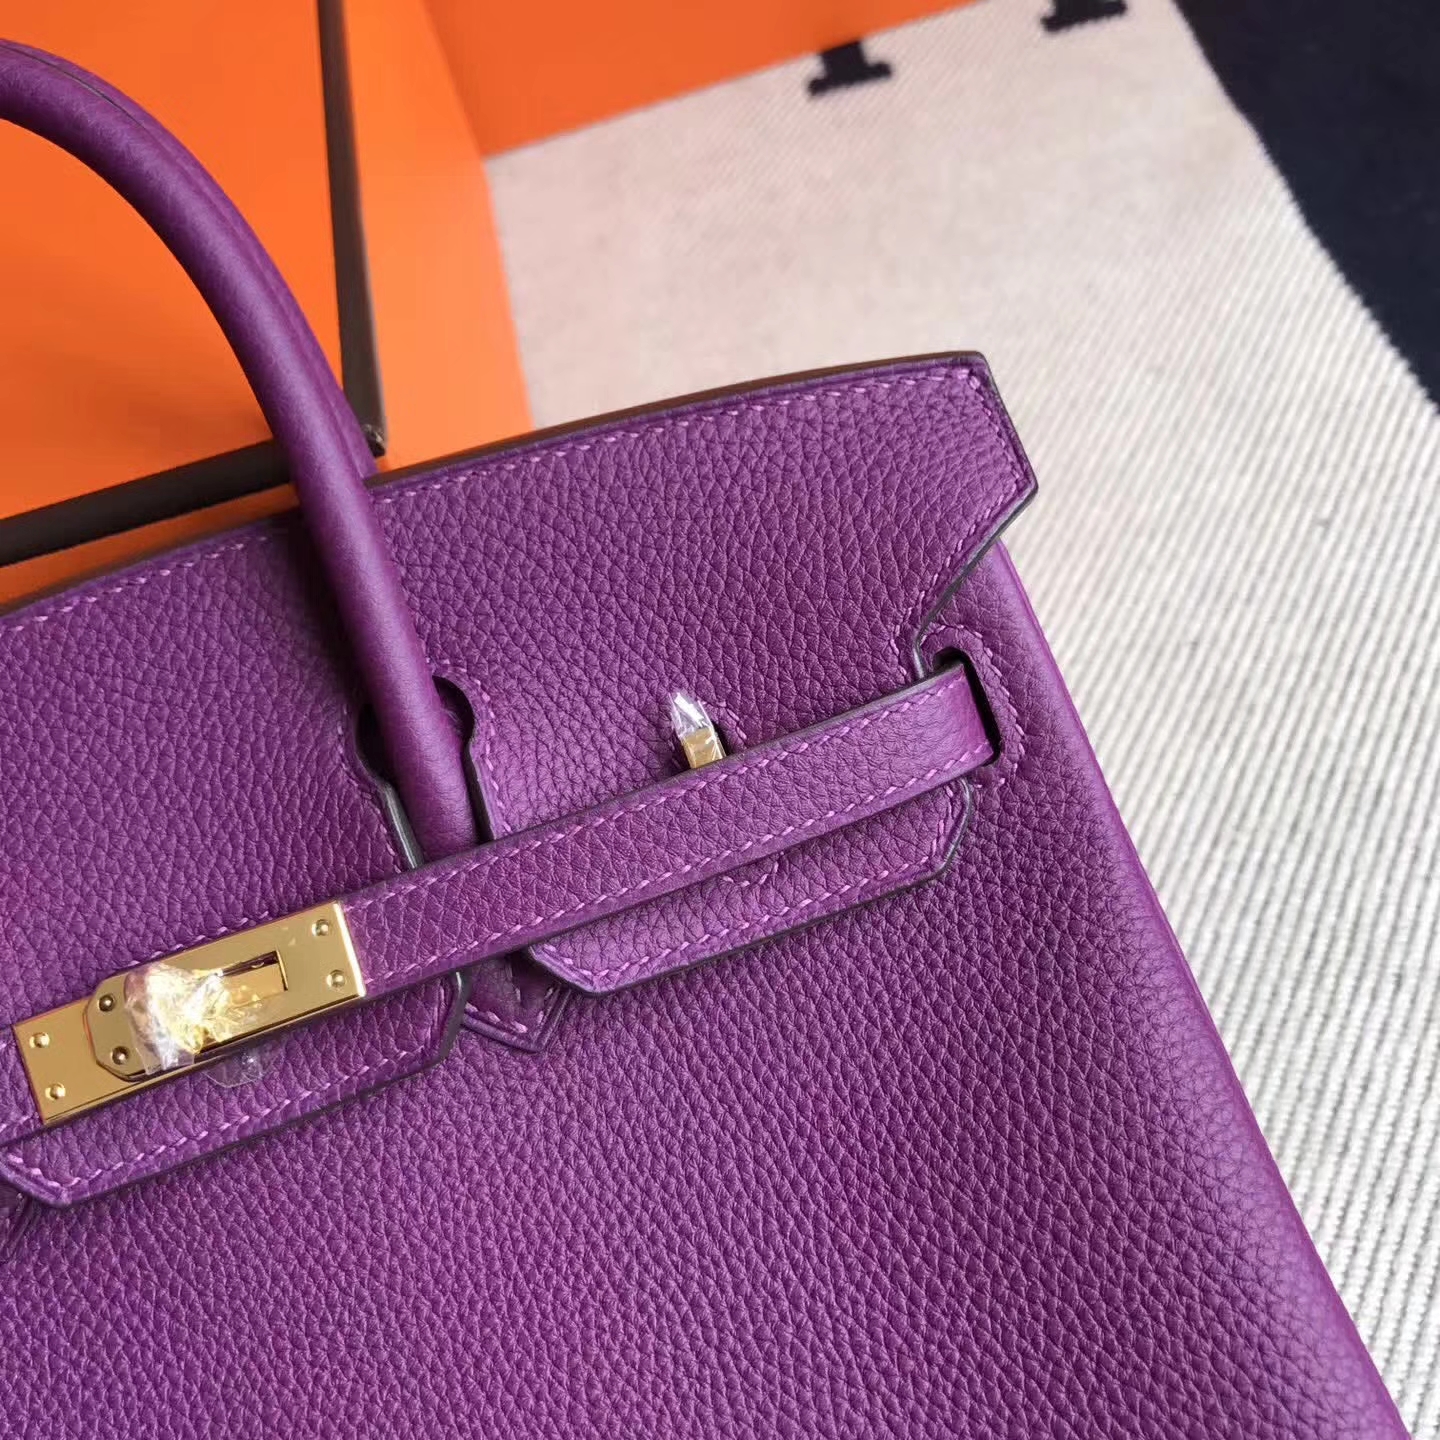 Discount Hermes P9 Amenone Purple Togo Leather Birkin25cm Bag – HEMA ...